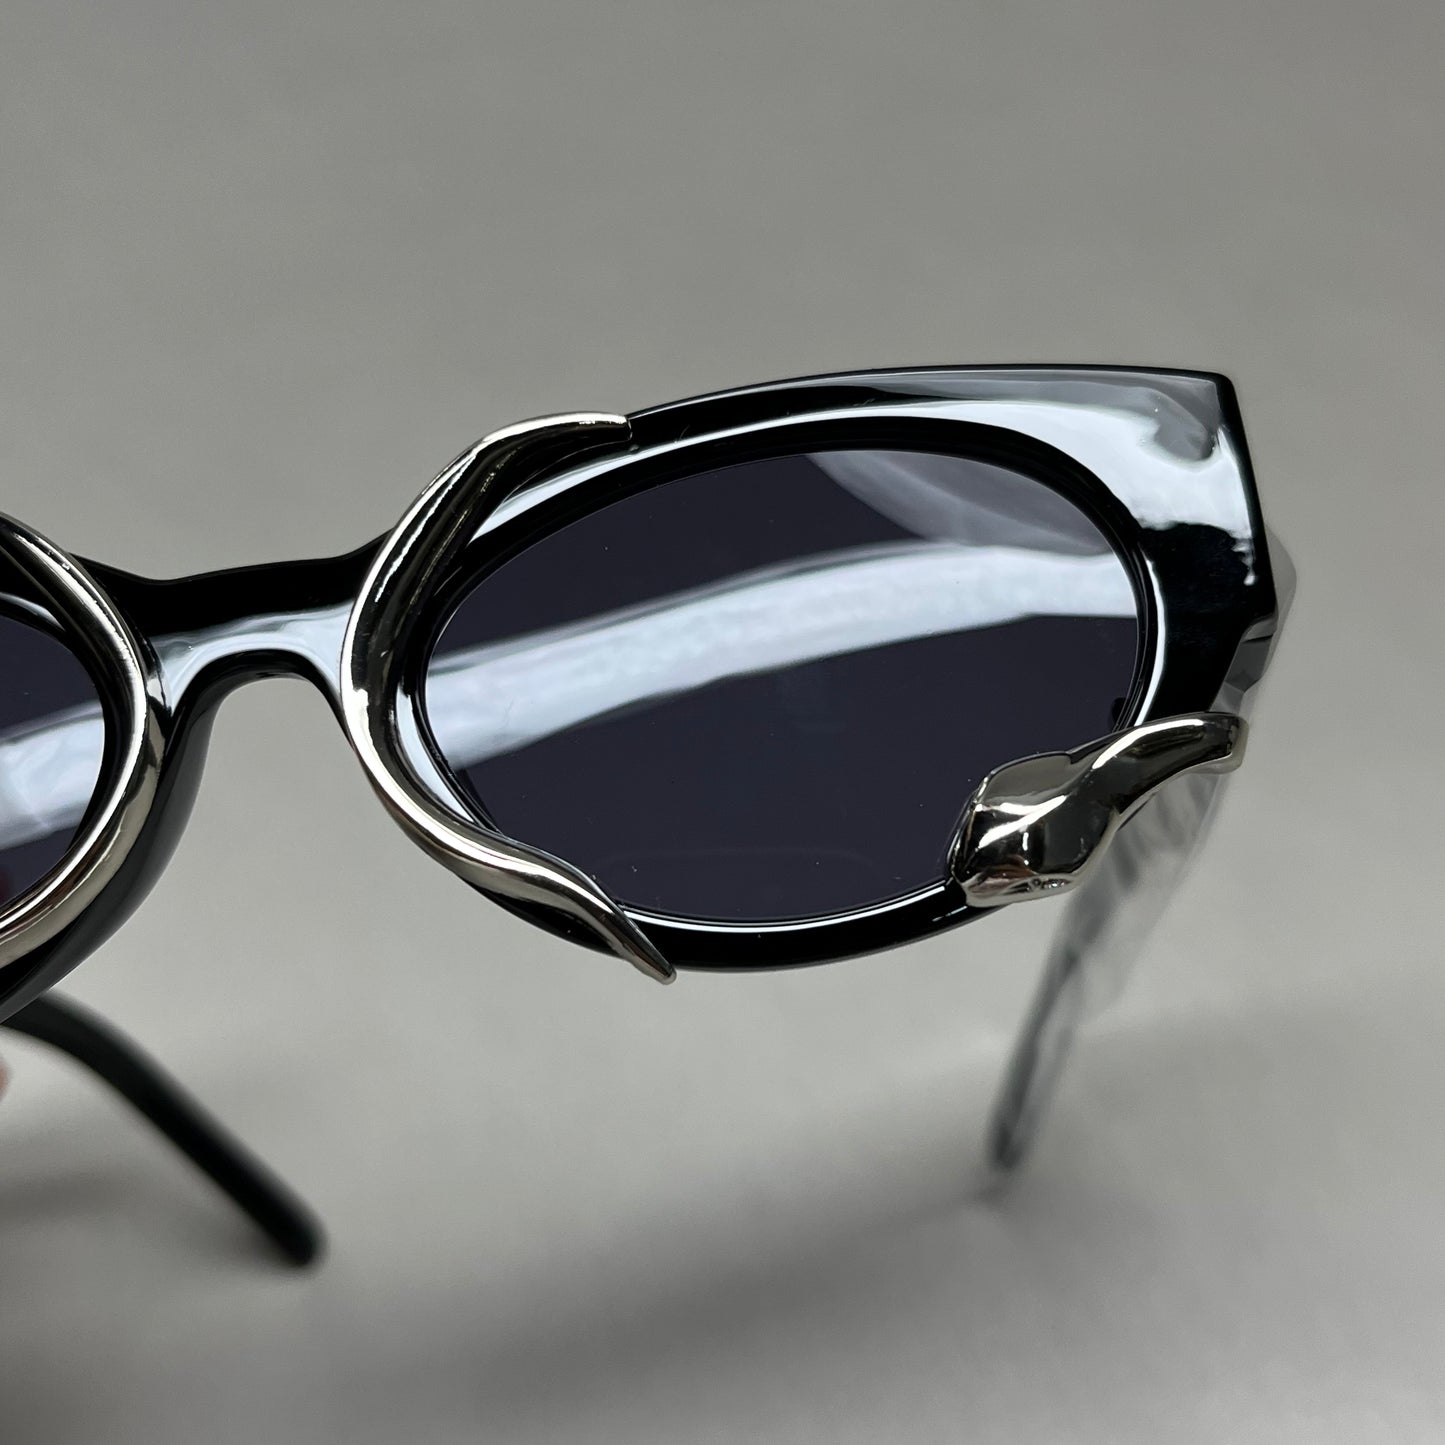 APPASSAL Vintage Metal Snake Sunglasses Black Frame/Grey Lens AP3621 (New)